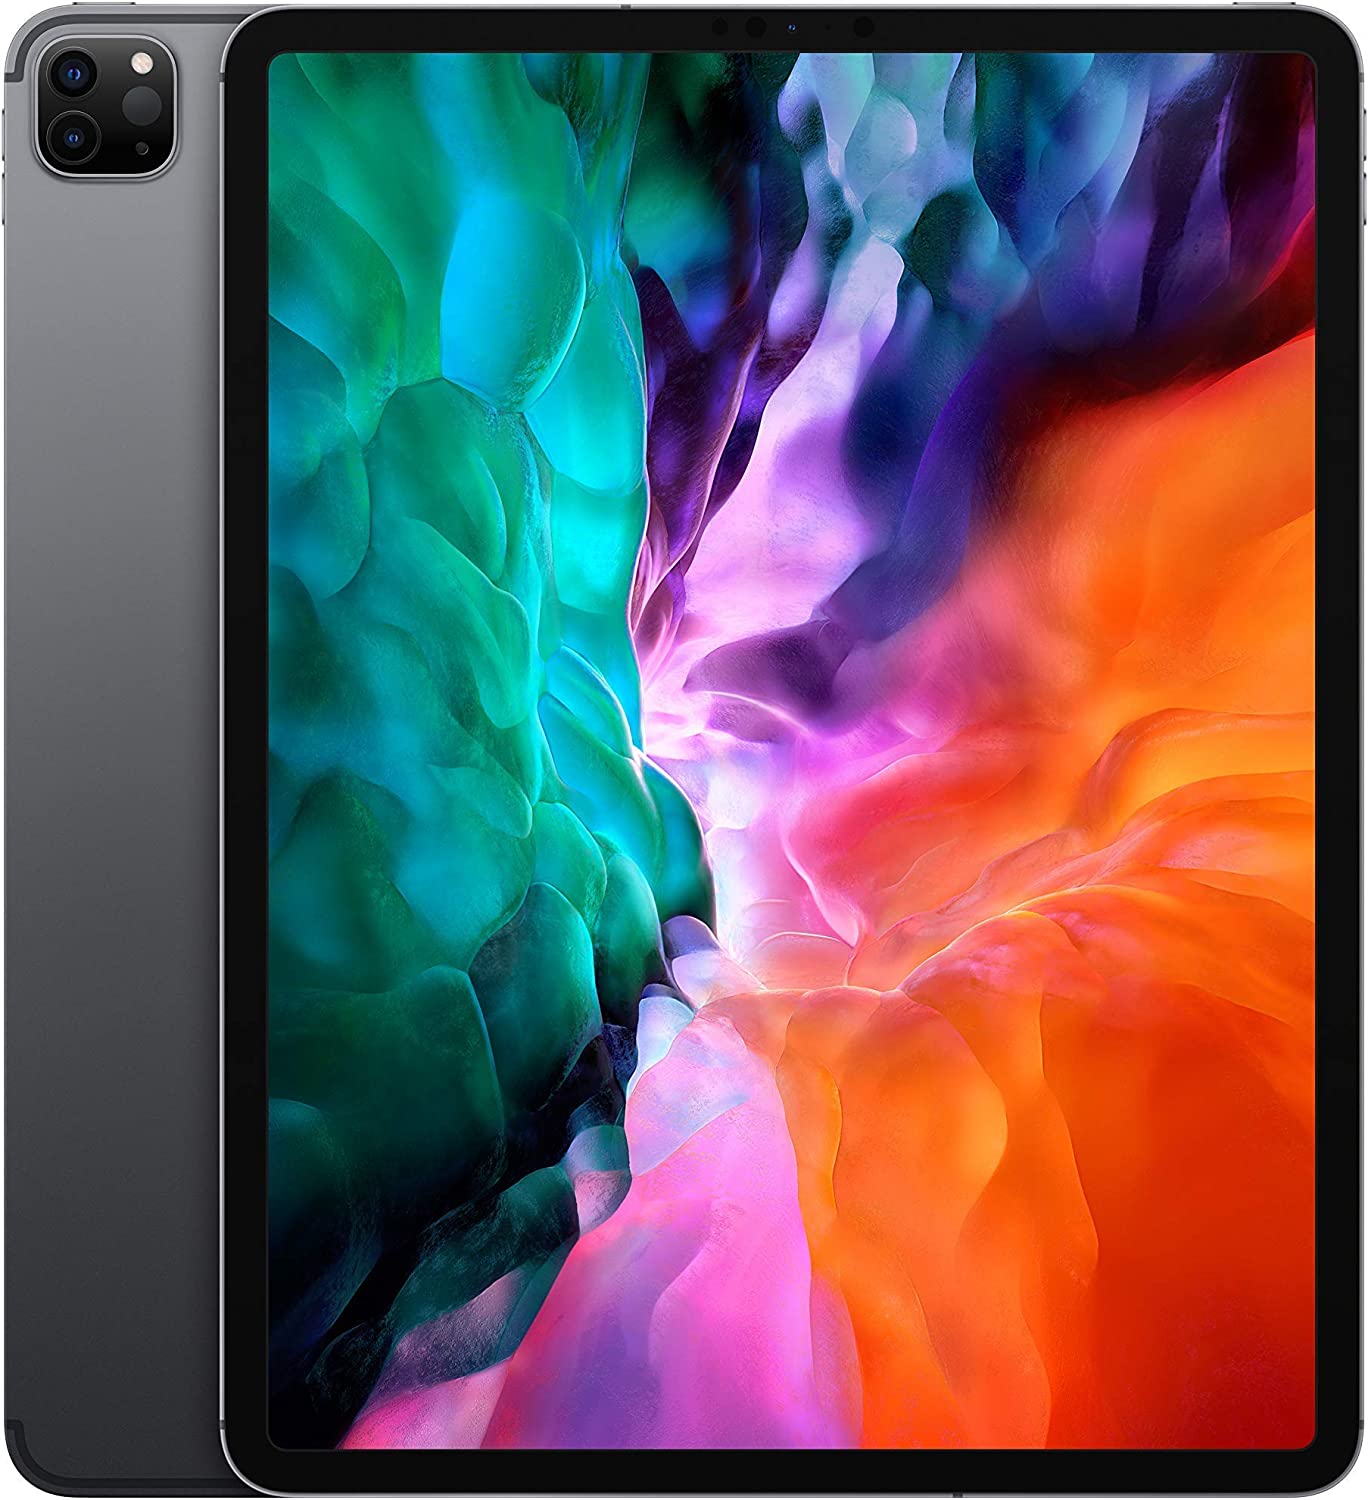 Apple iPad Pro 4th Gen (2020) 12.9in 512GB Wifi + Cellular (Unlocked) - Space Gray (Refurbished)